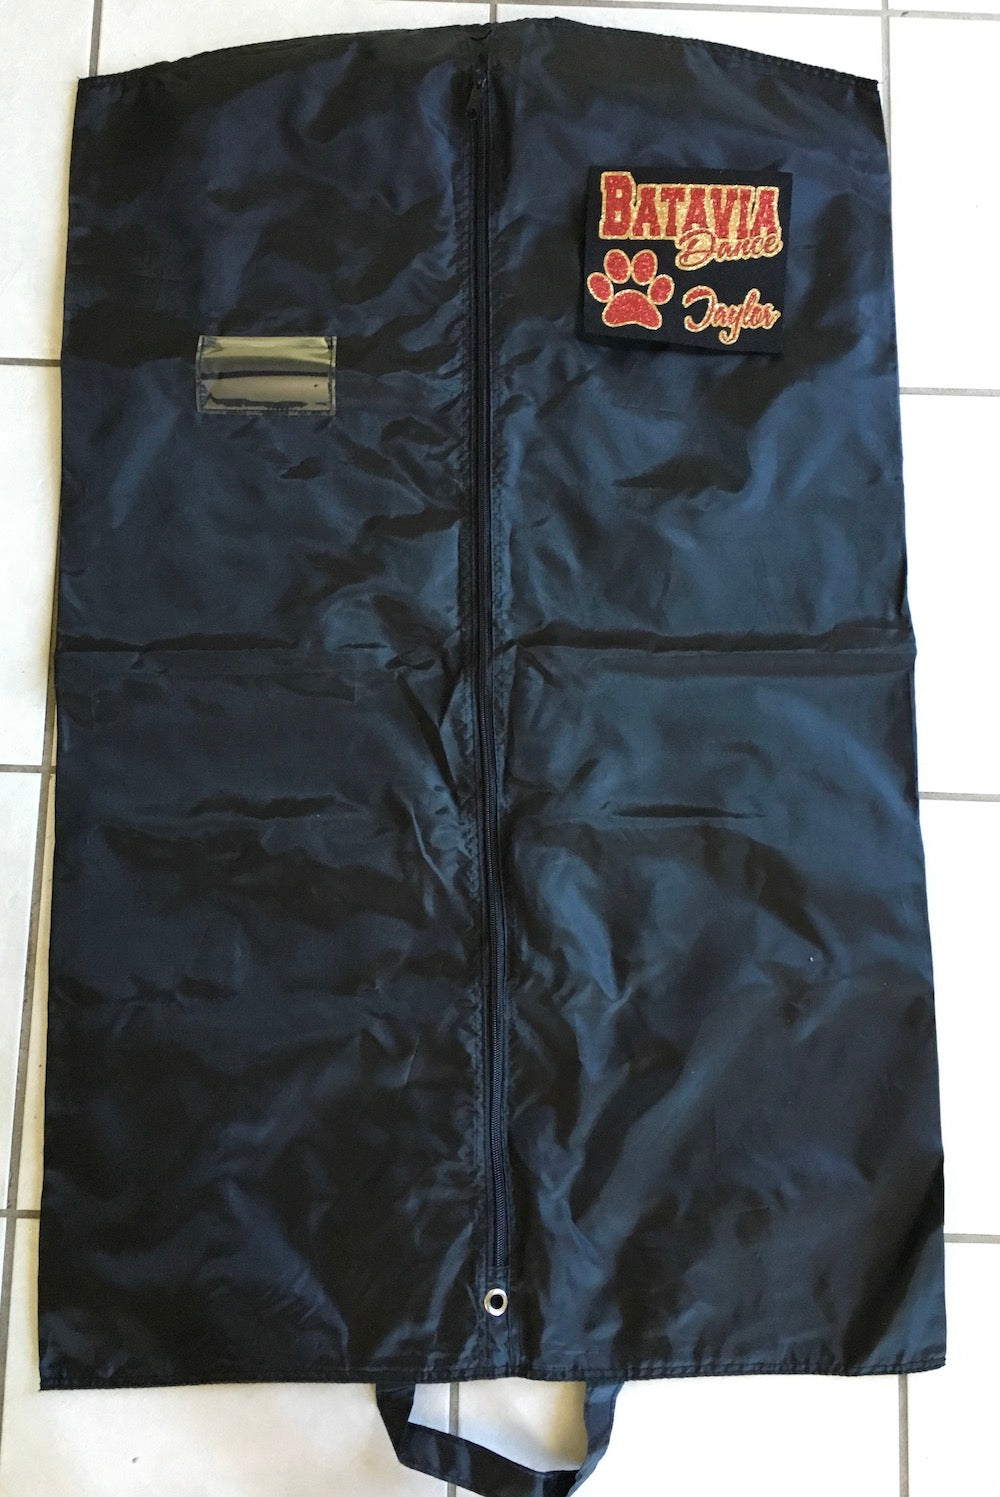 Batavia High School Personalized Garment Bag